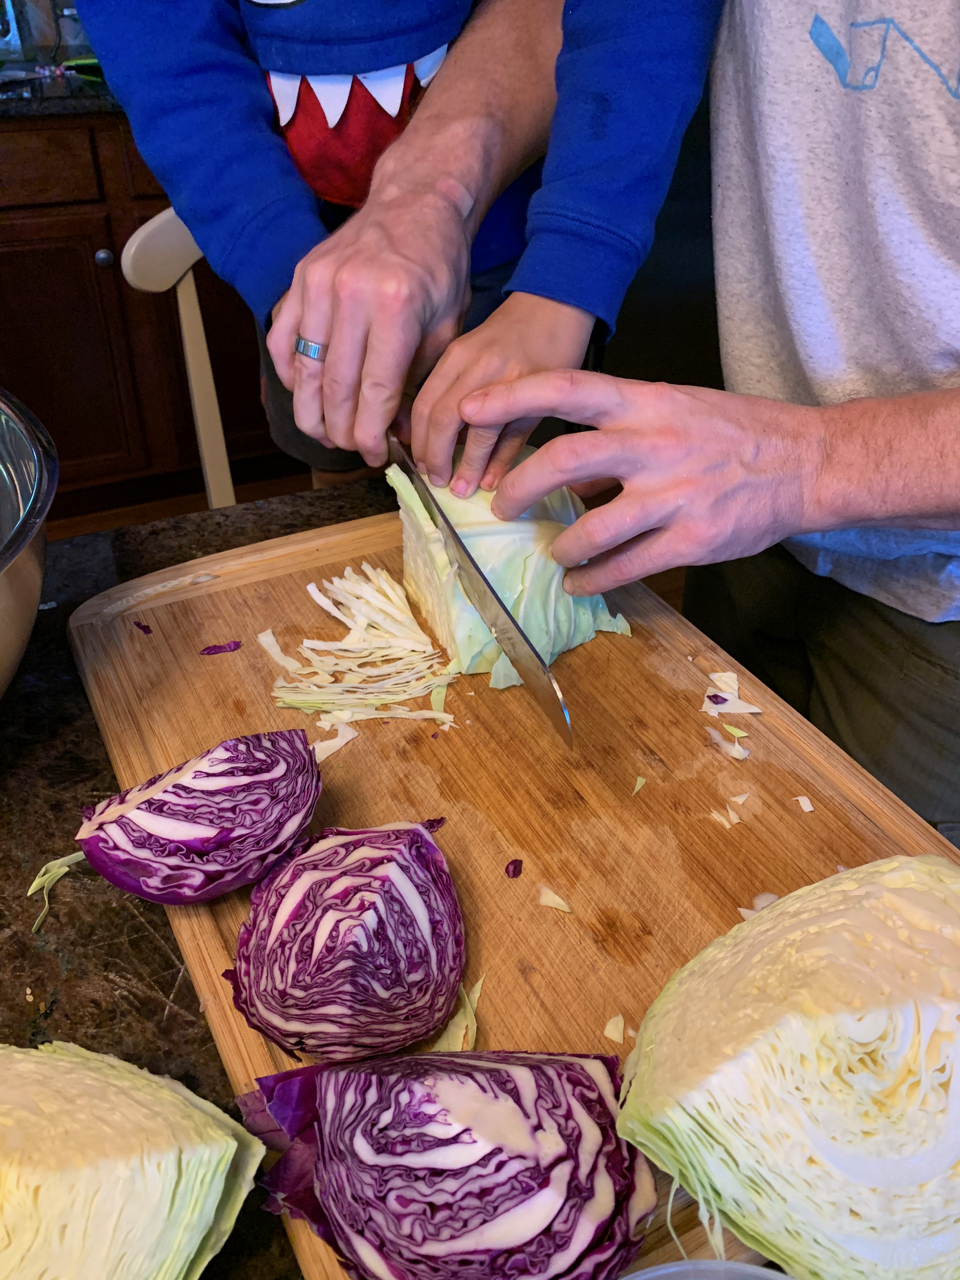 Prepping the sauerkraut